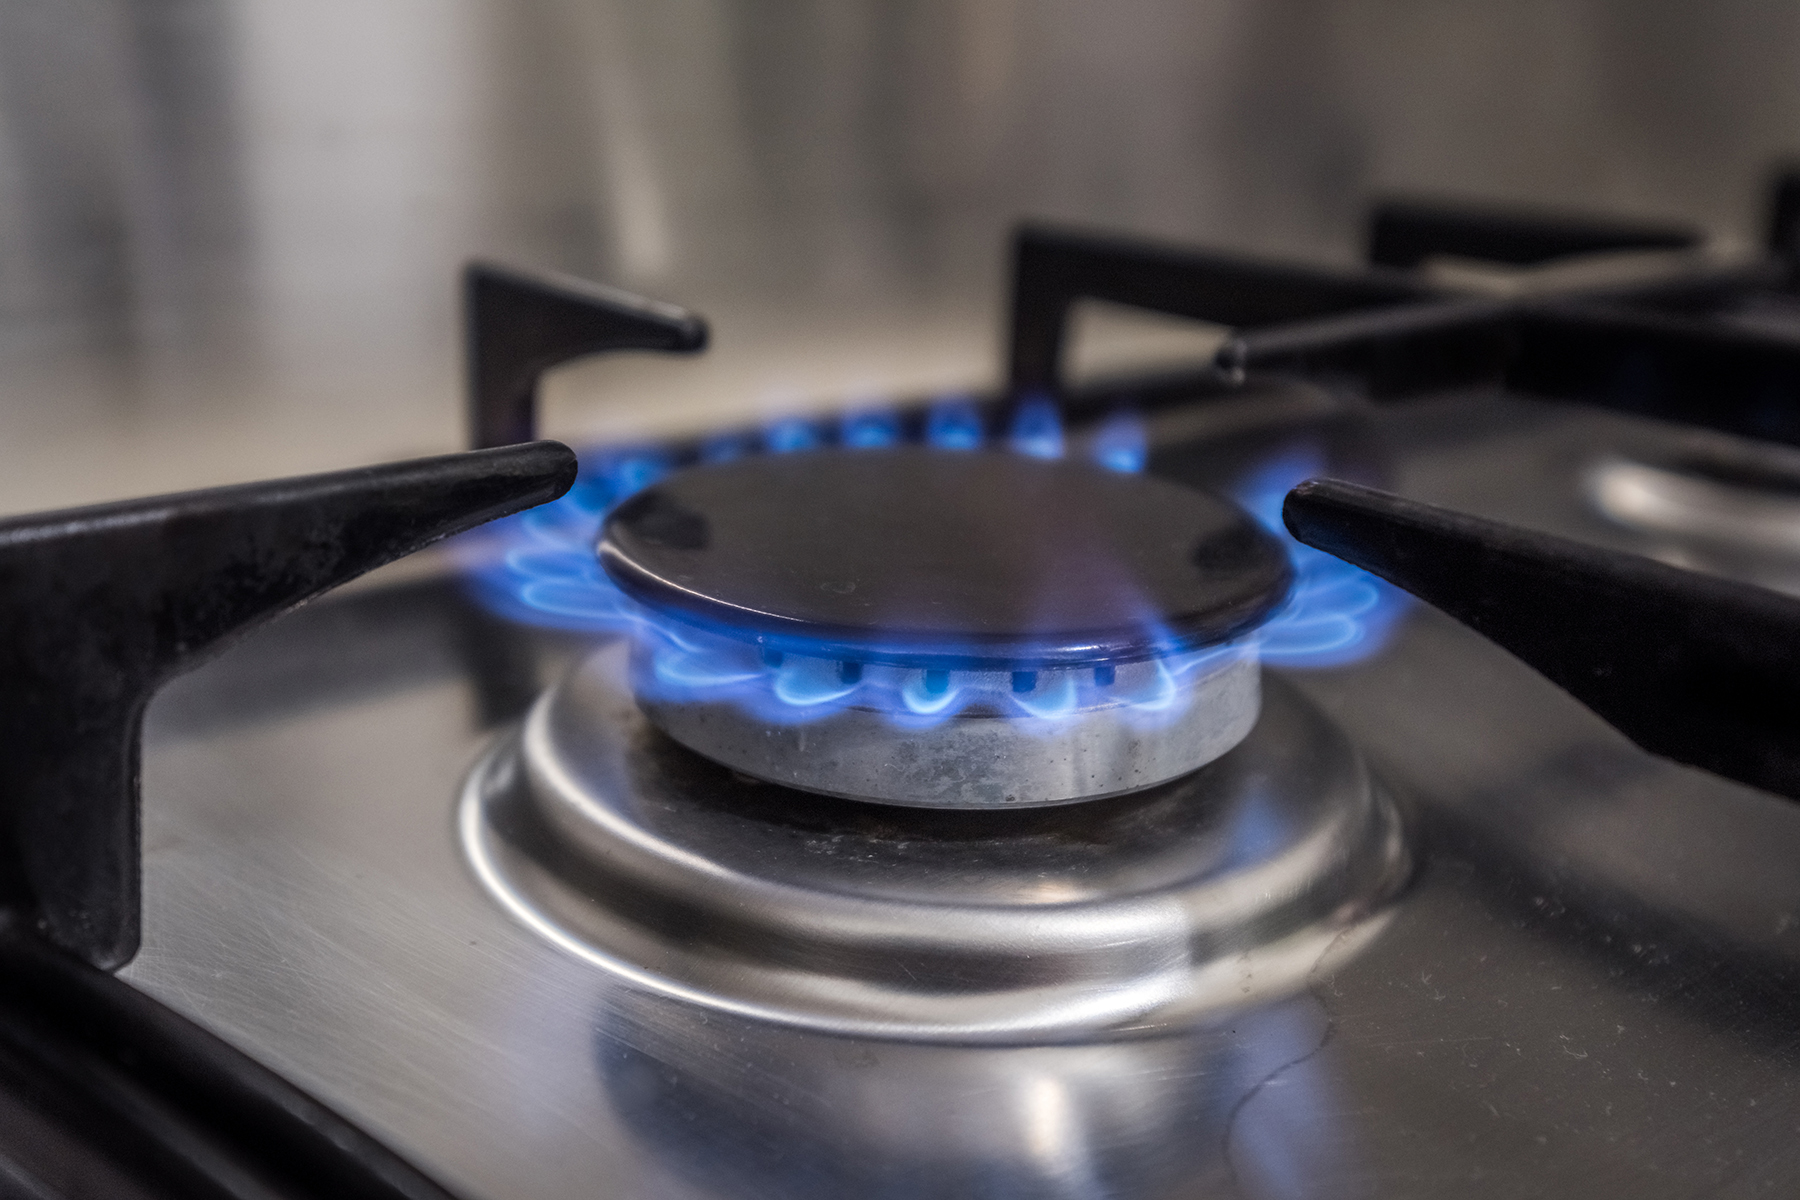 A lit gas stove